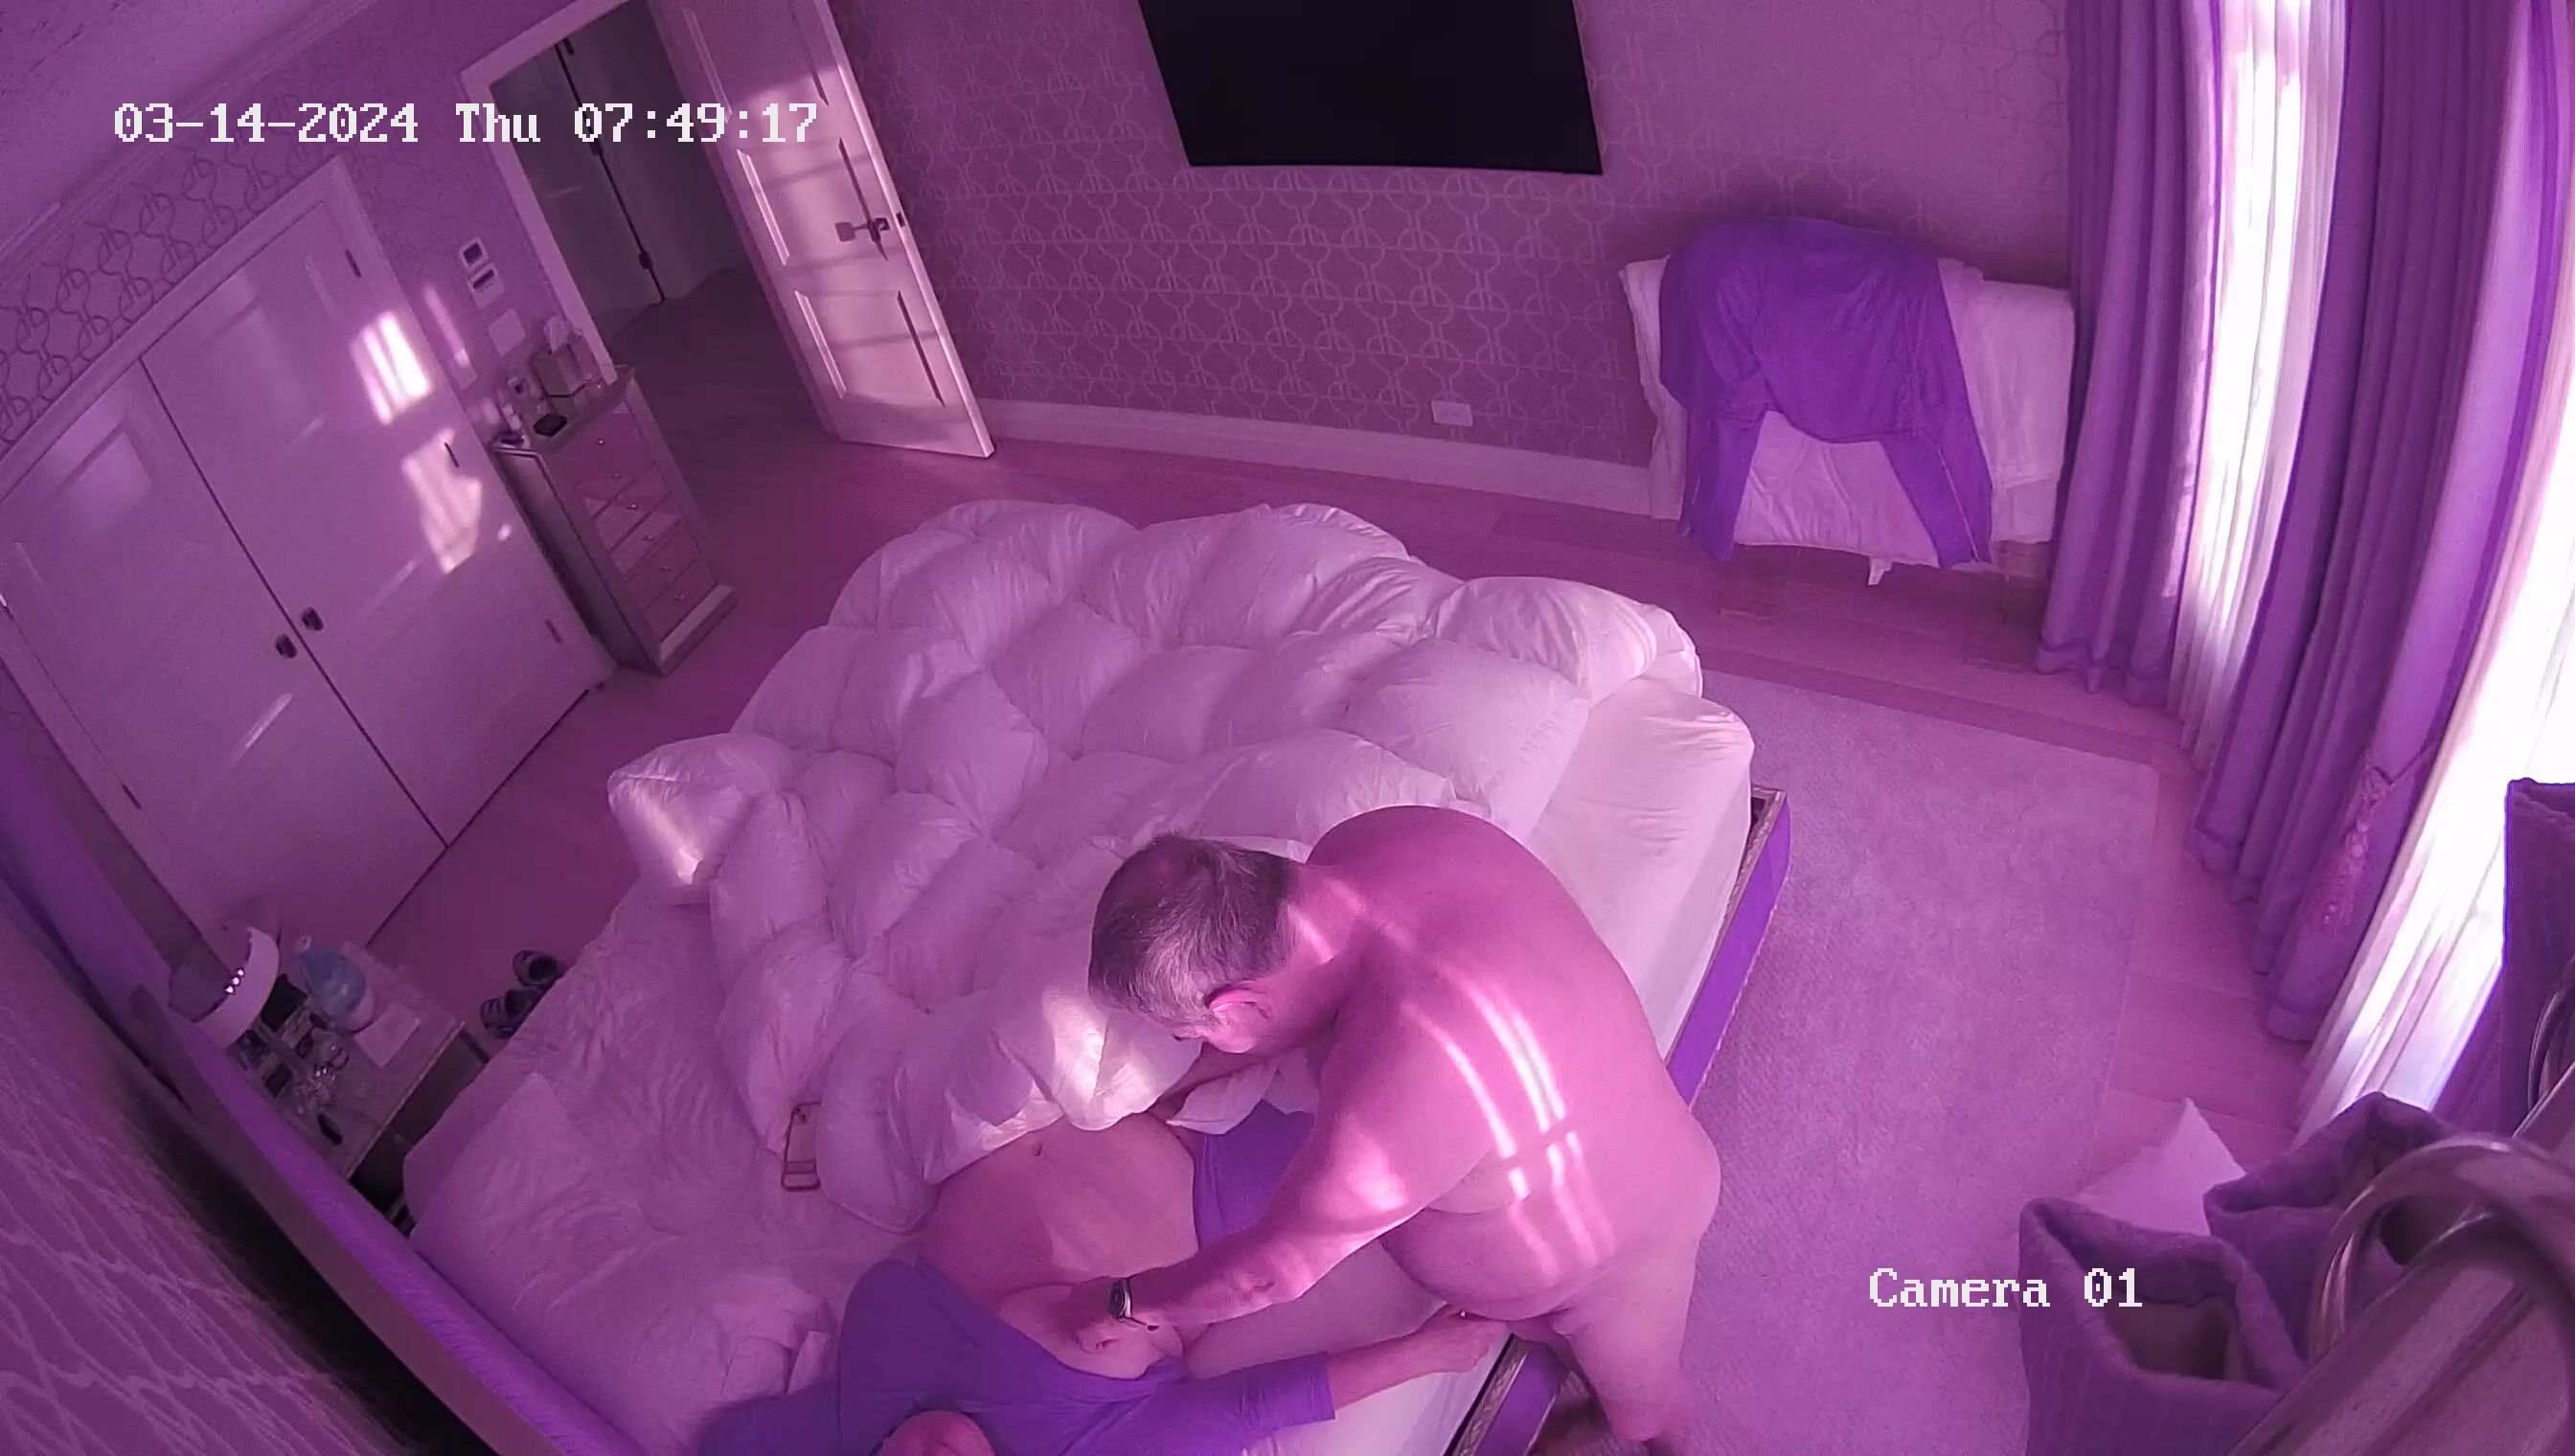 Amateur Australian couple fuck before going to sleep hidden cam